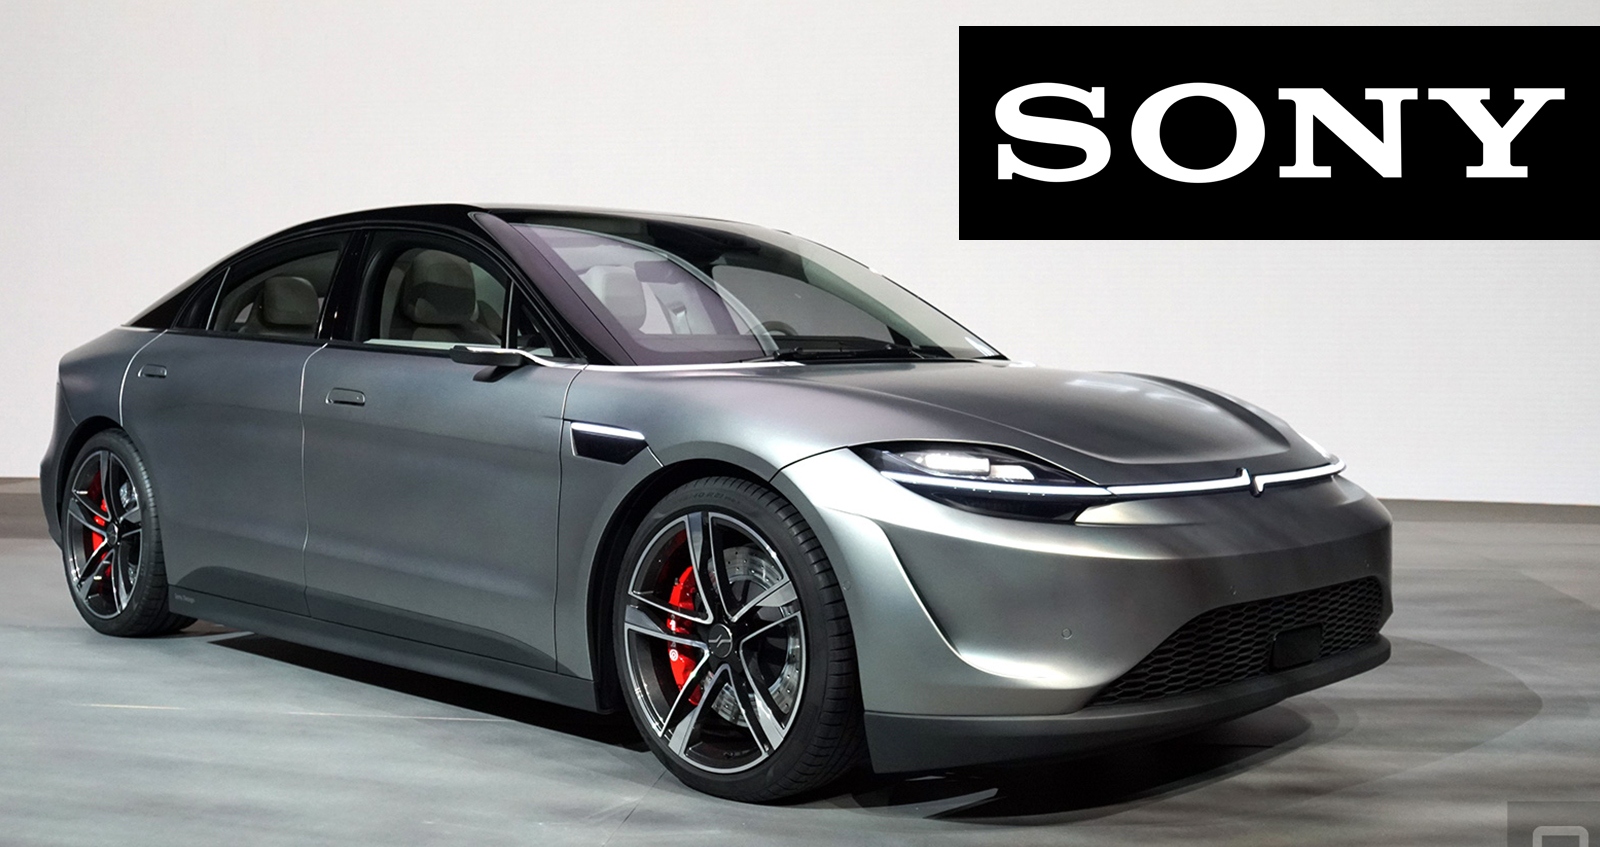 SONY ยังคงพัฒนารถยนต์ไฟฟ้า Vision-S แต่ยังไม่พร้อมจำหน่าย